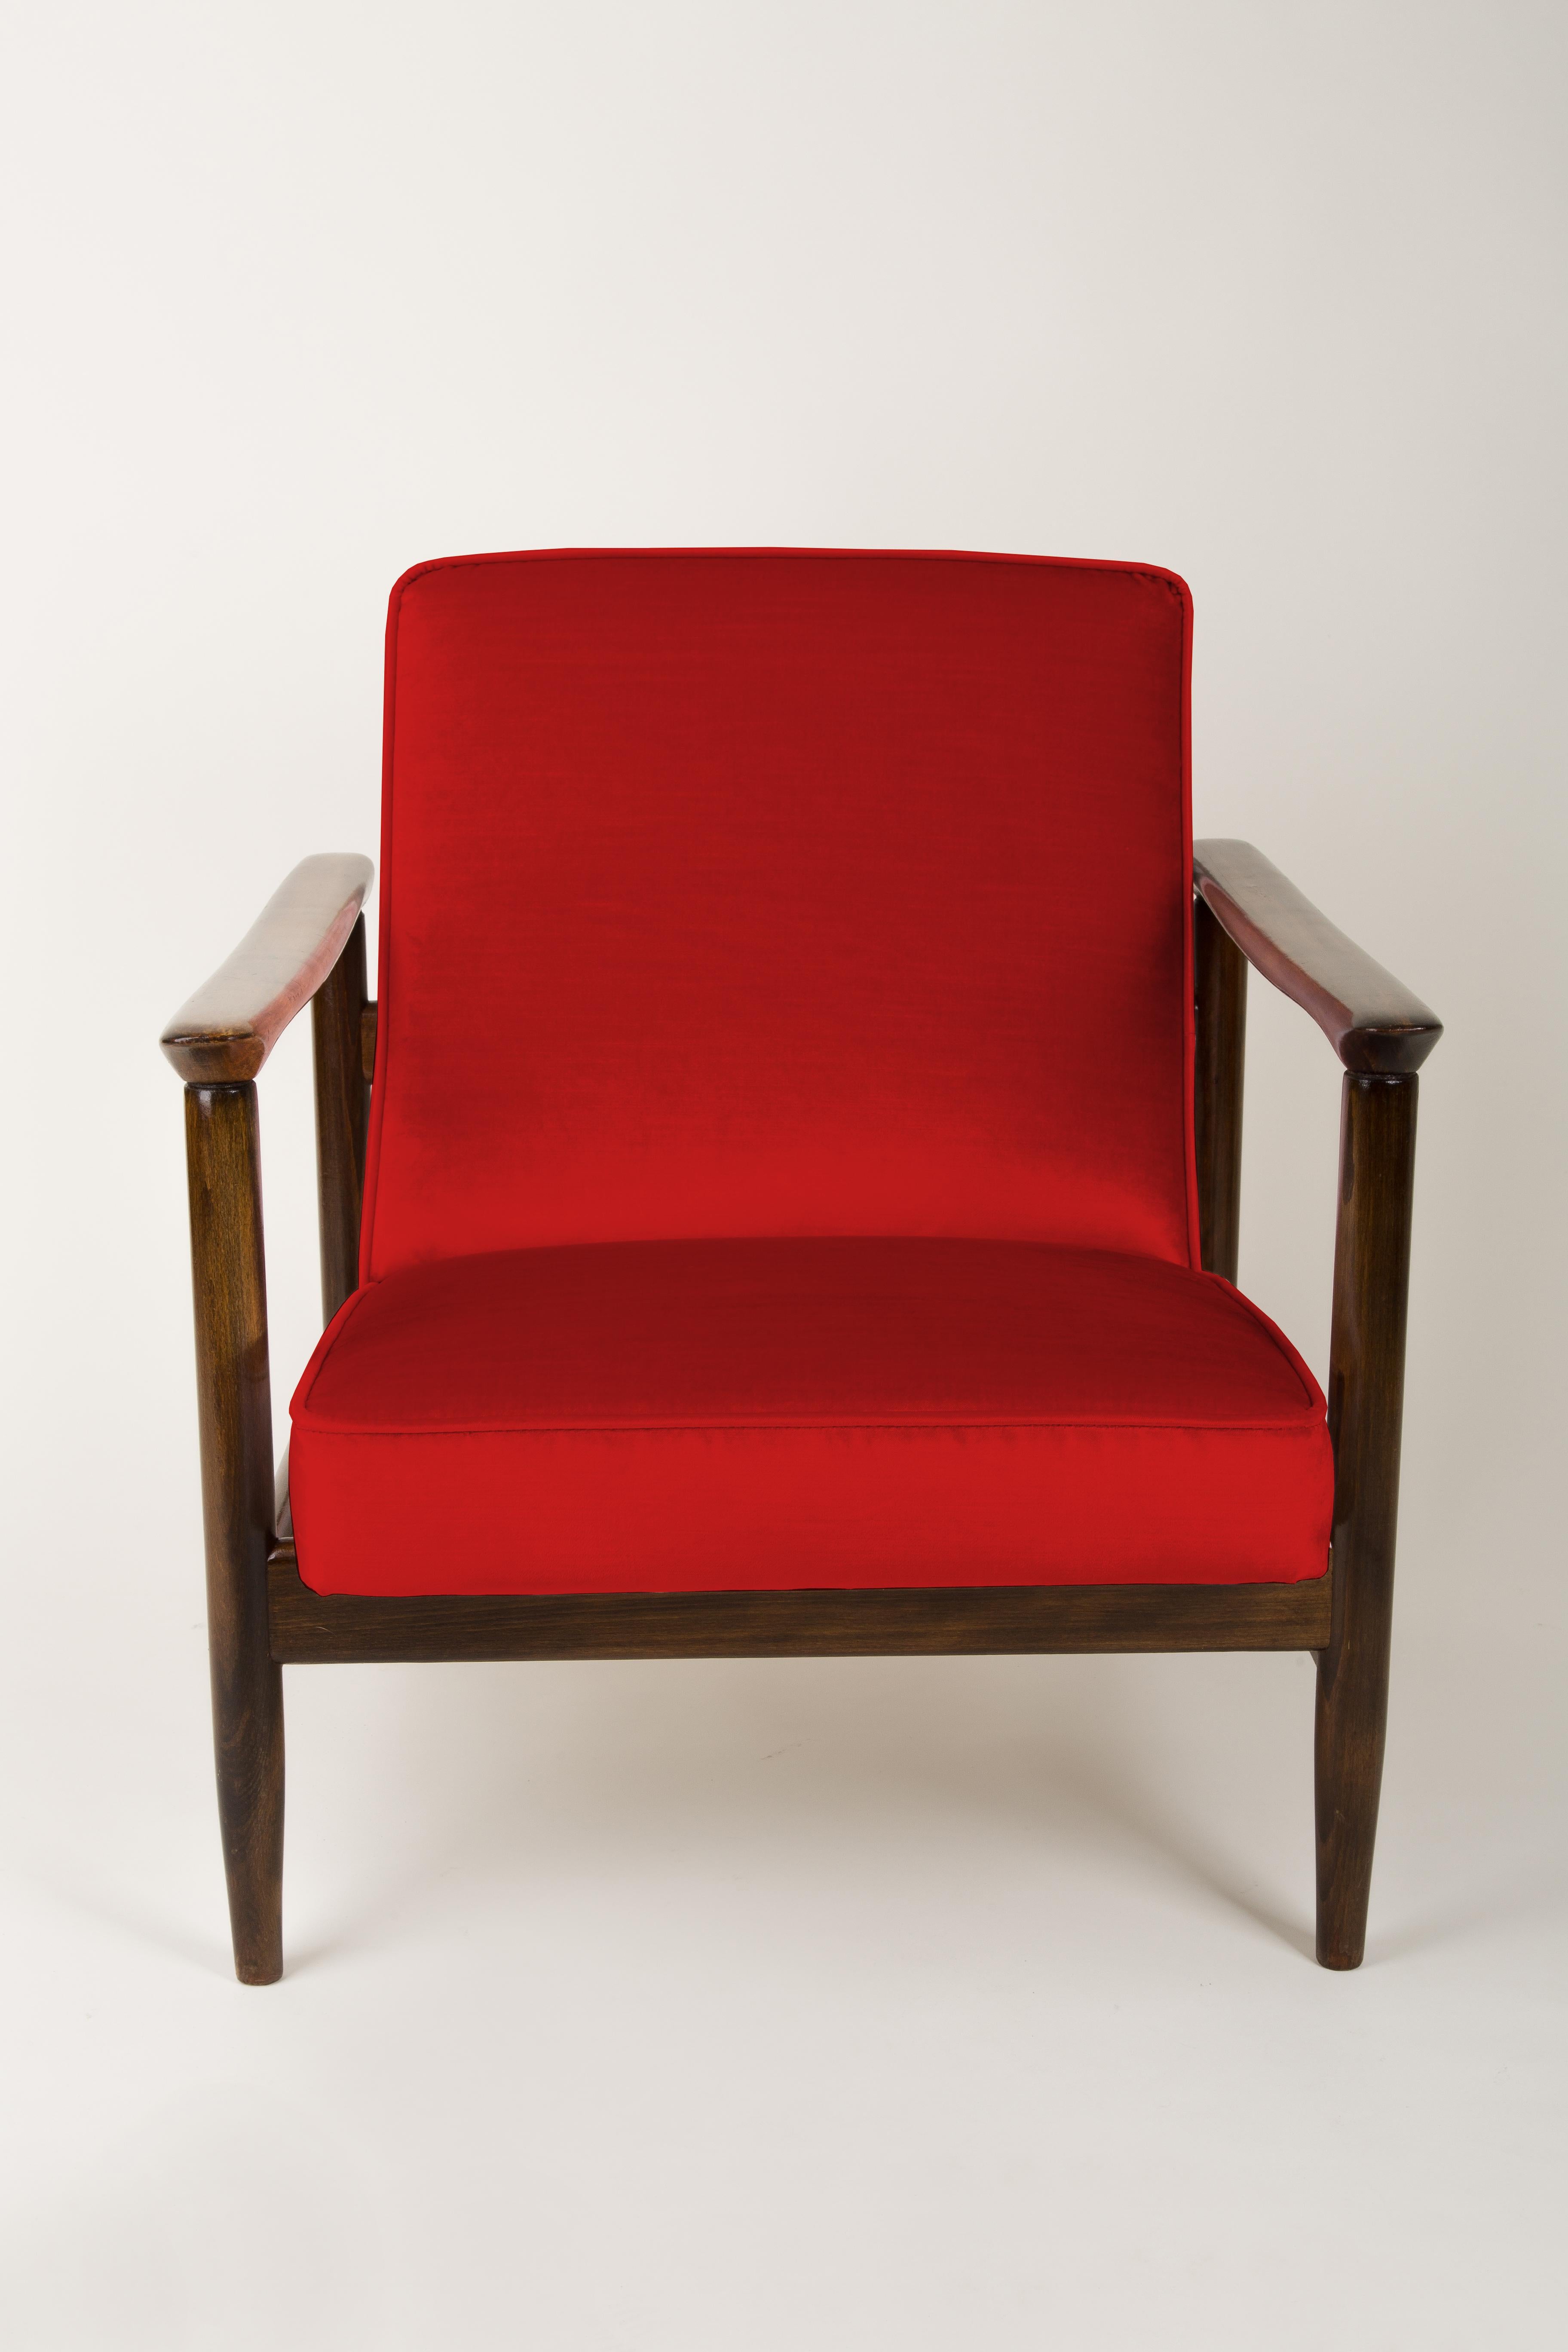 Polish Red Armchair, Edmund Homa, GFM-142, 1960s, Poland For Sale